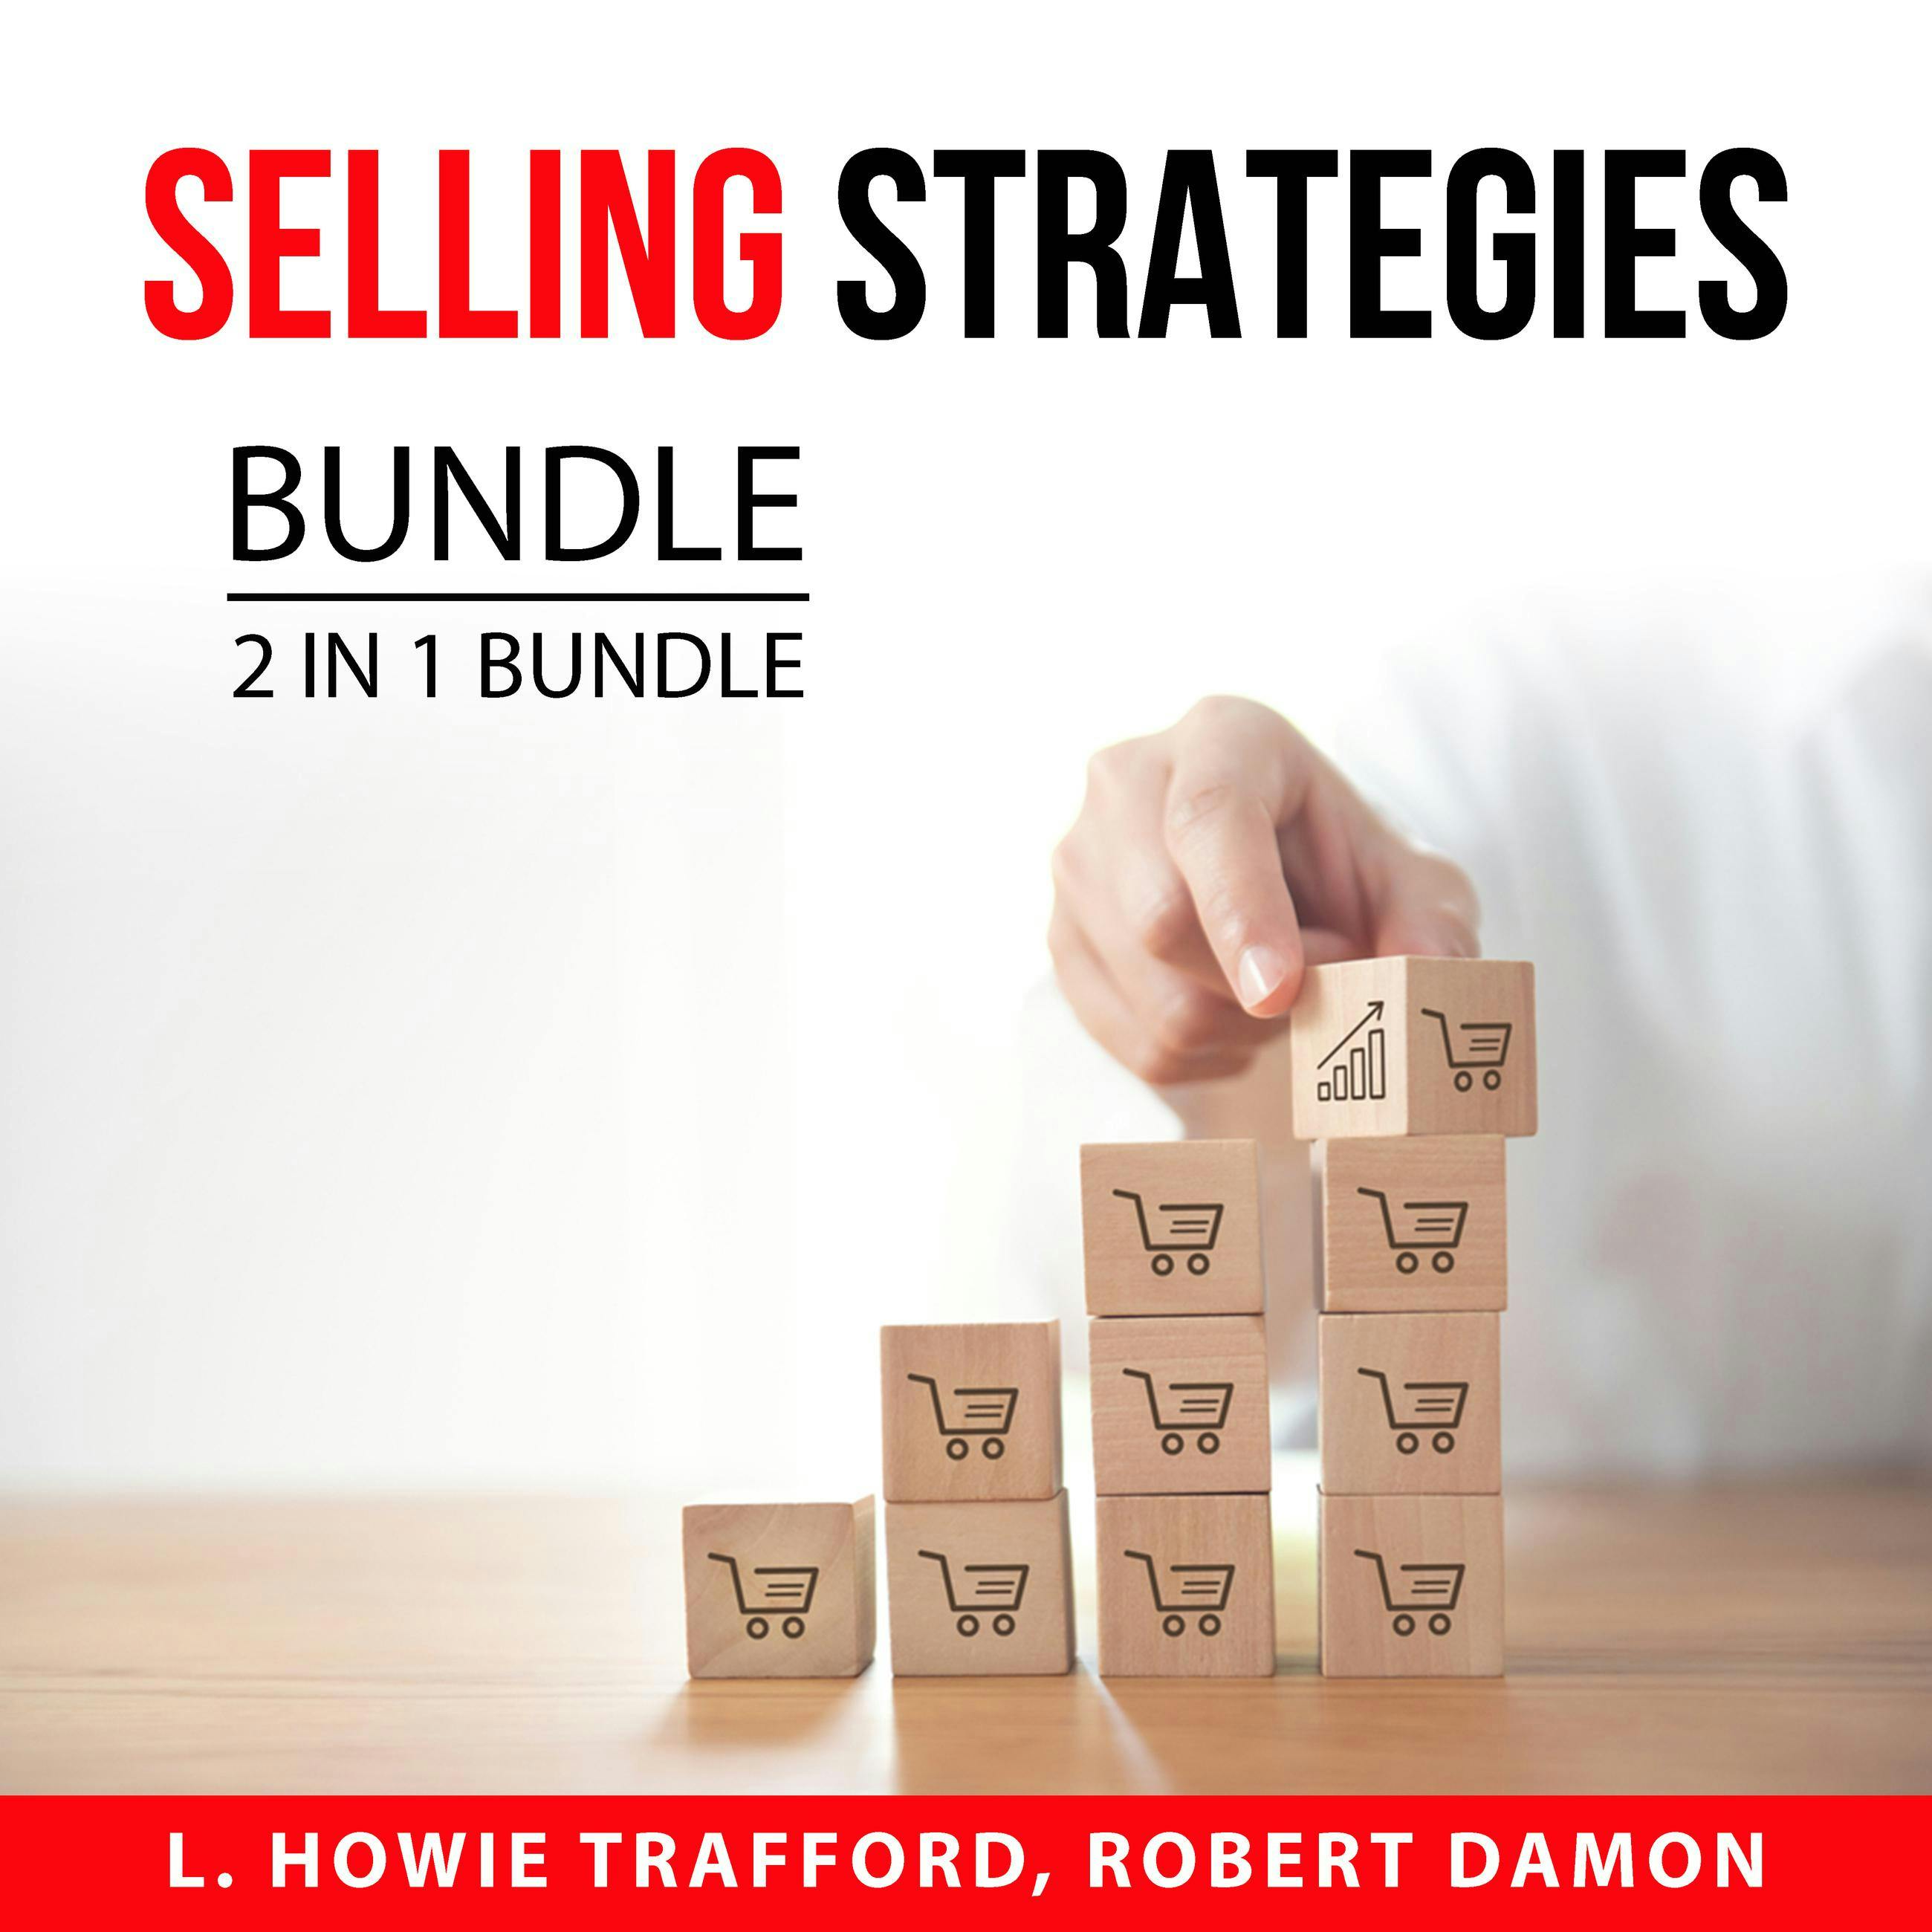 Selling Strategies Bundle, 2 in 1 Bundle: How to Create a Bestseller and Close Every Sale - Howie Trafford, Robert Damon